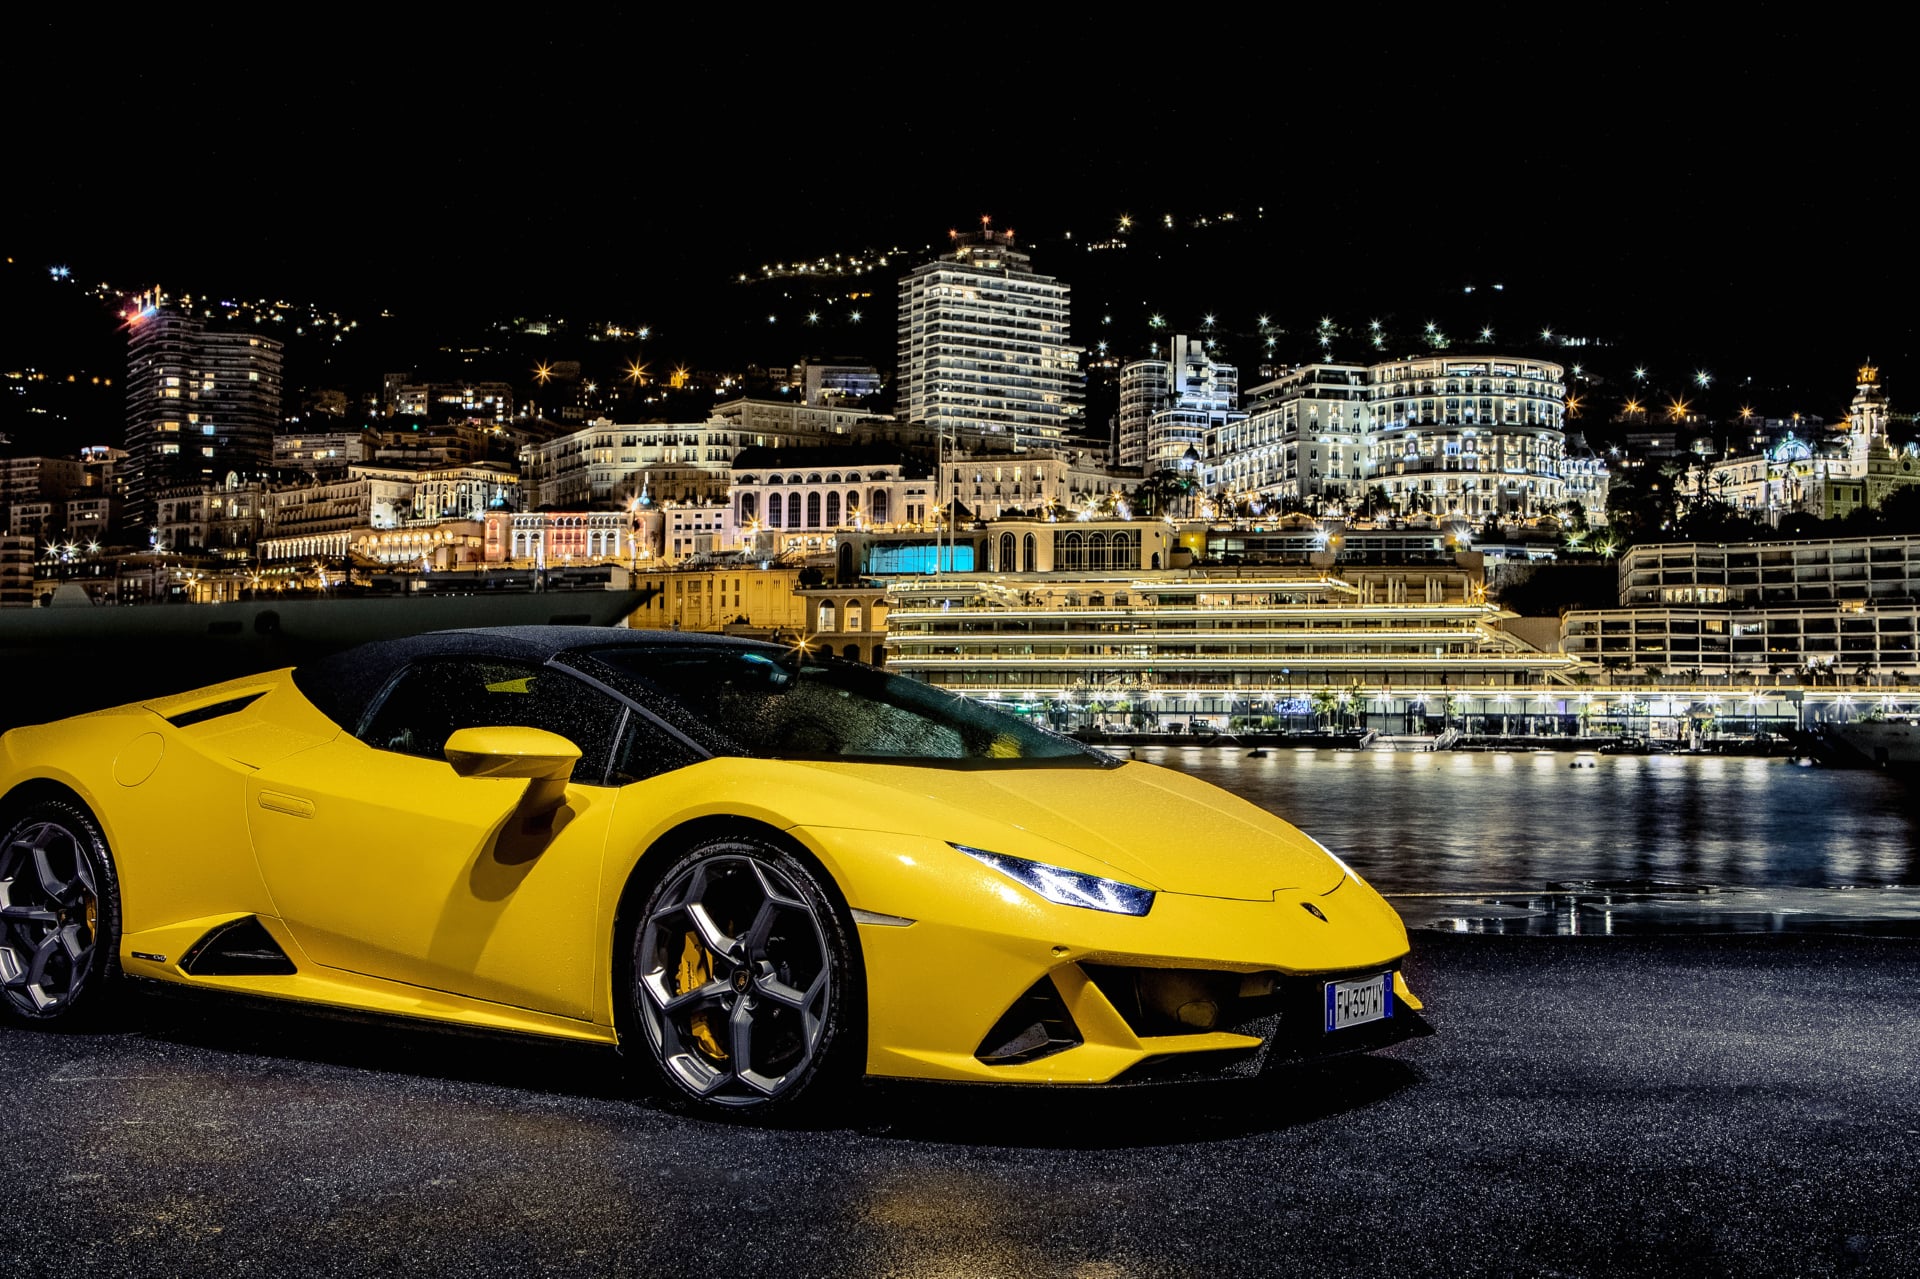 Lamborghini Huracan EVO Spyder at 2048 x 2048 iPad size wallpapers HD quality